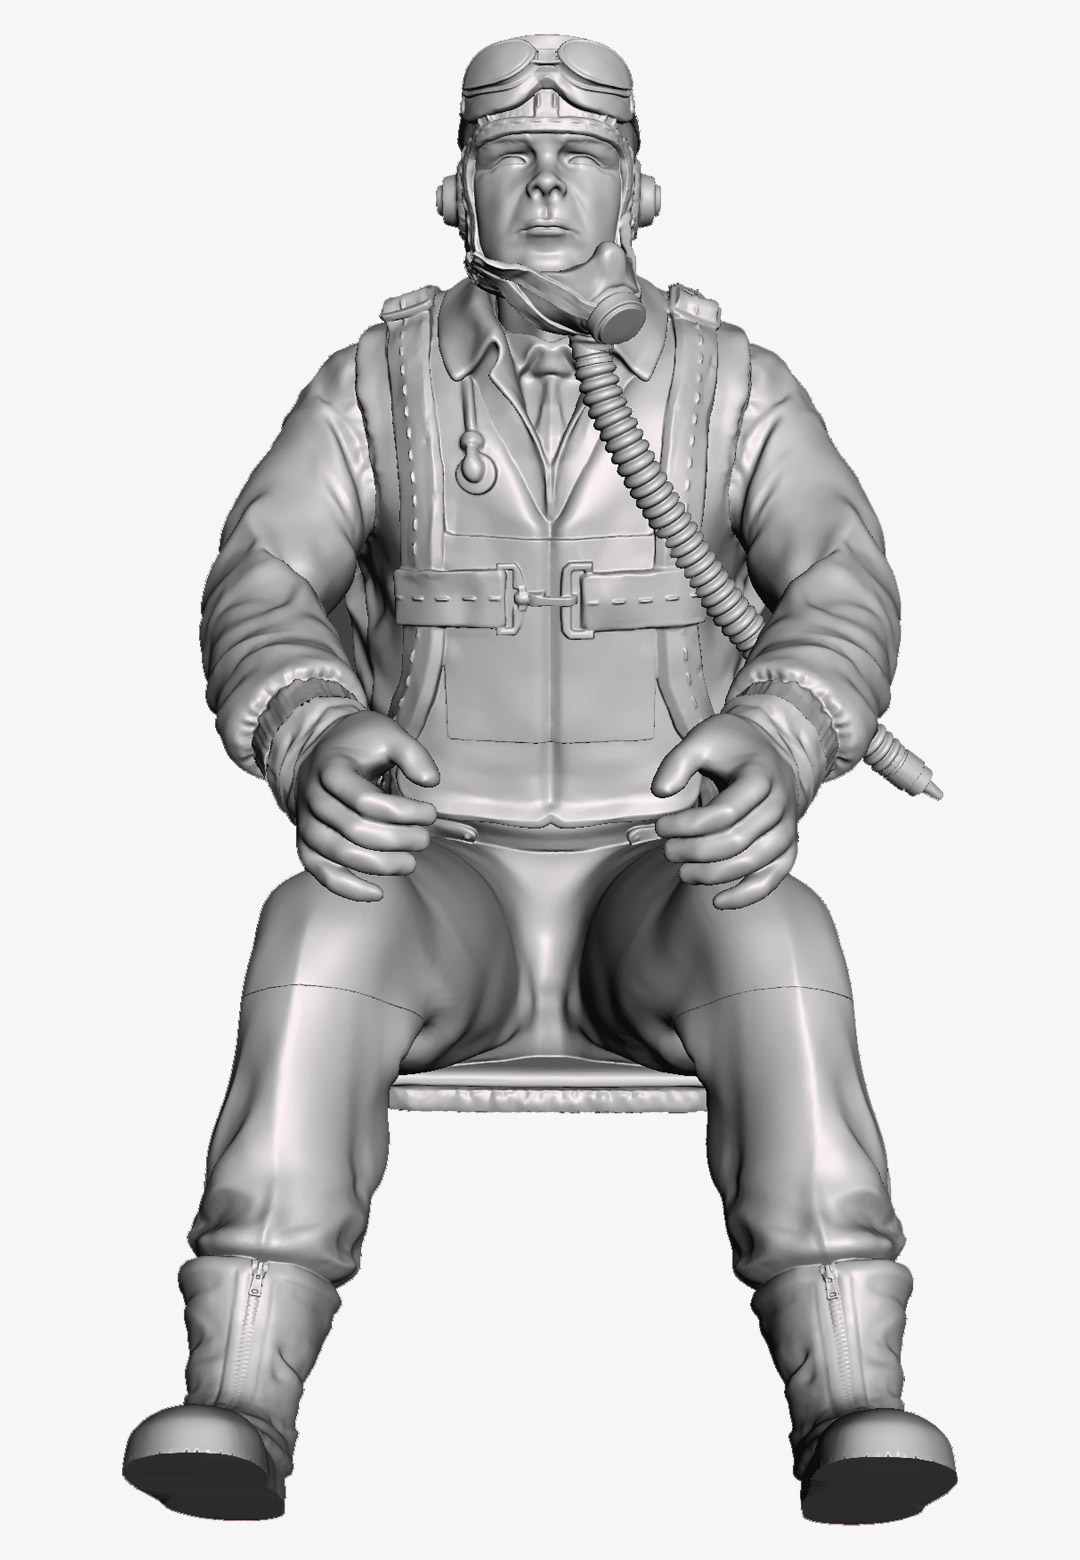 bastlero - Richard Ira Bong 3D printable figure